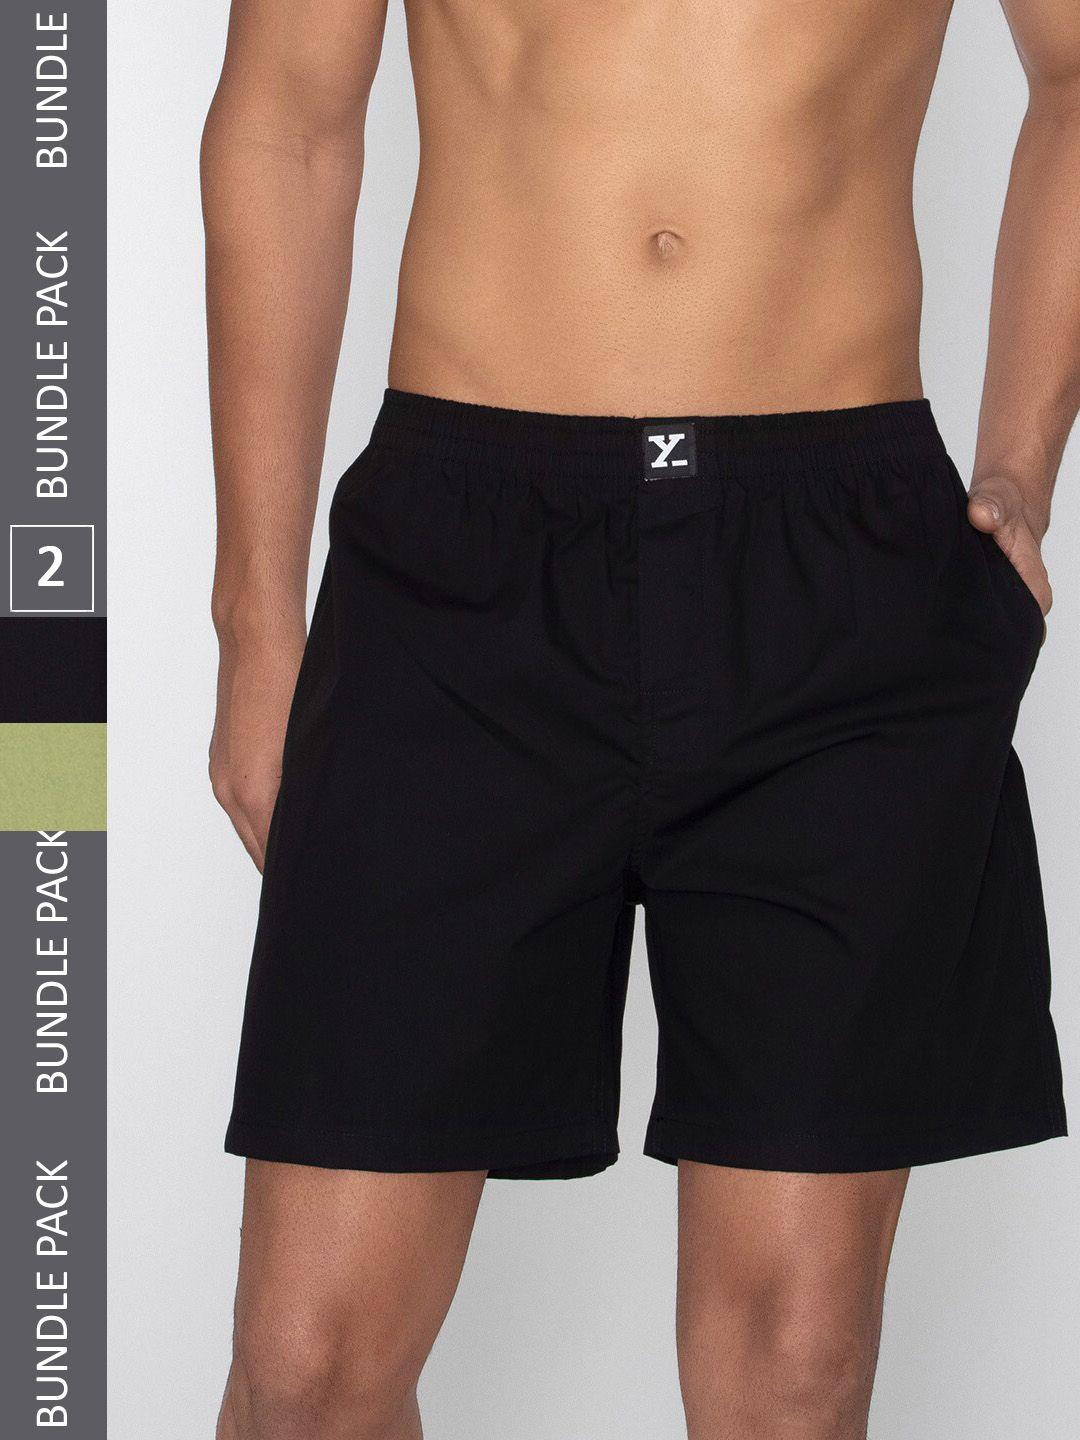 xyxx-men-plus-size-pack-of-2-pure-cotton-boxers